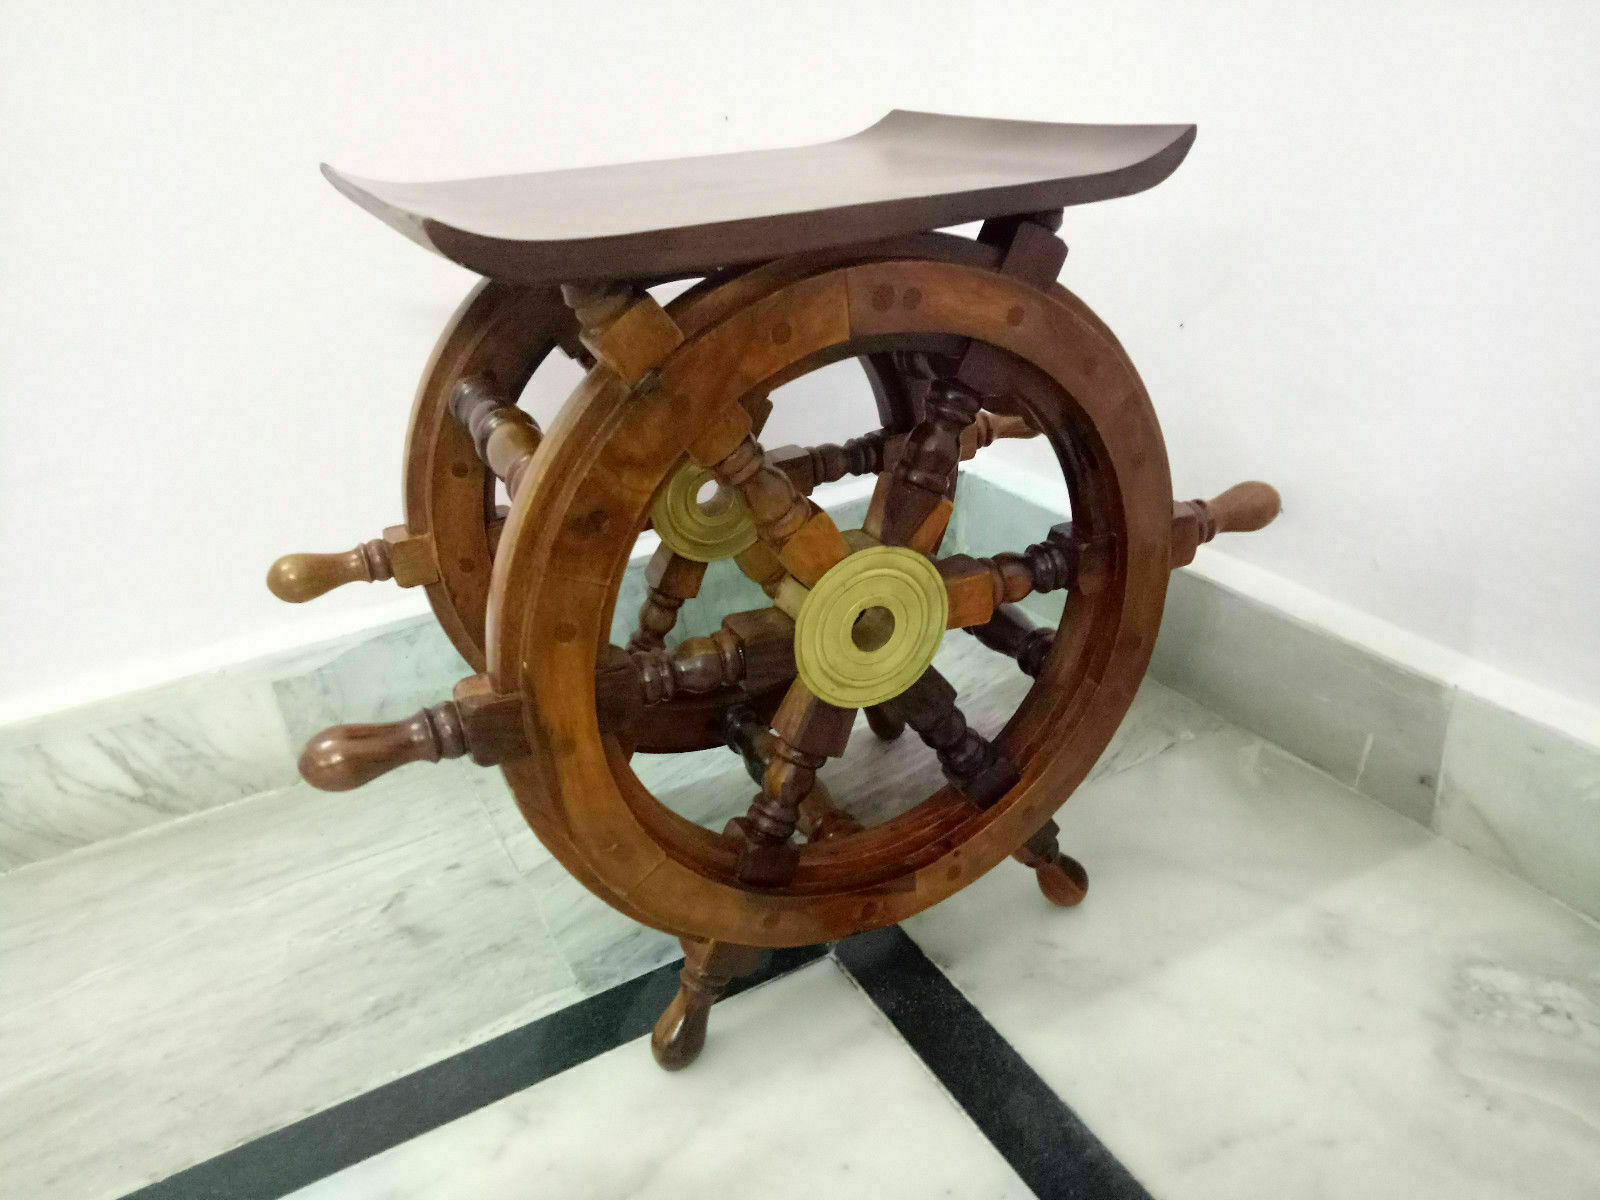 Nautical wheel table ship boat steering end decor pirate wooden teak furniture G